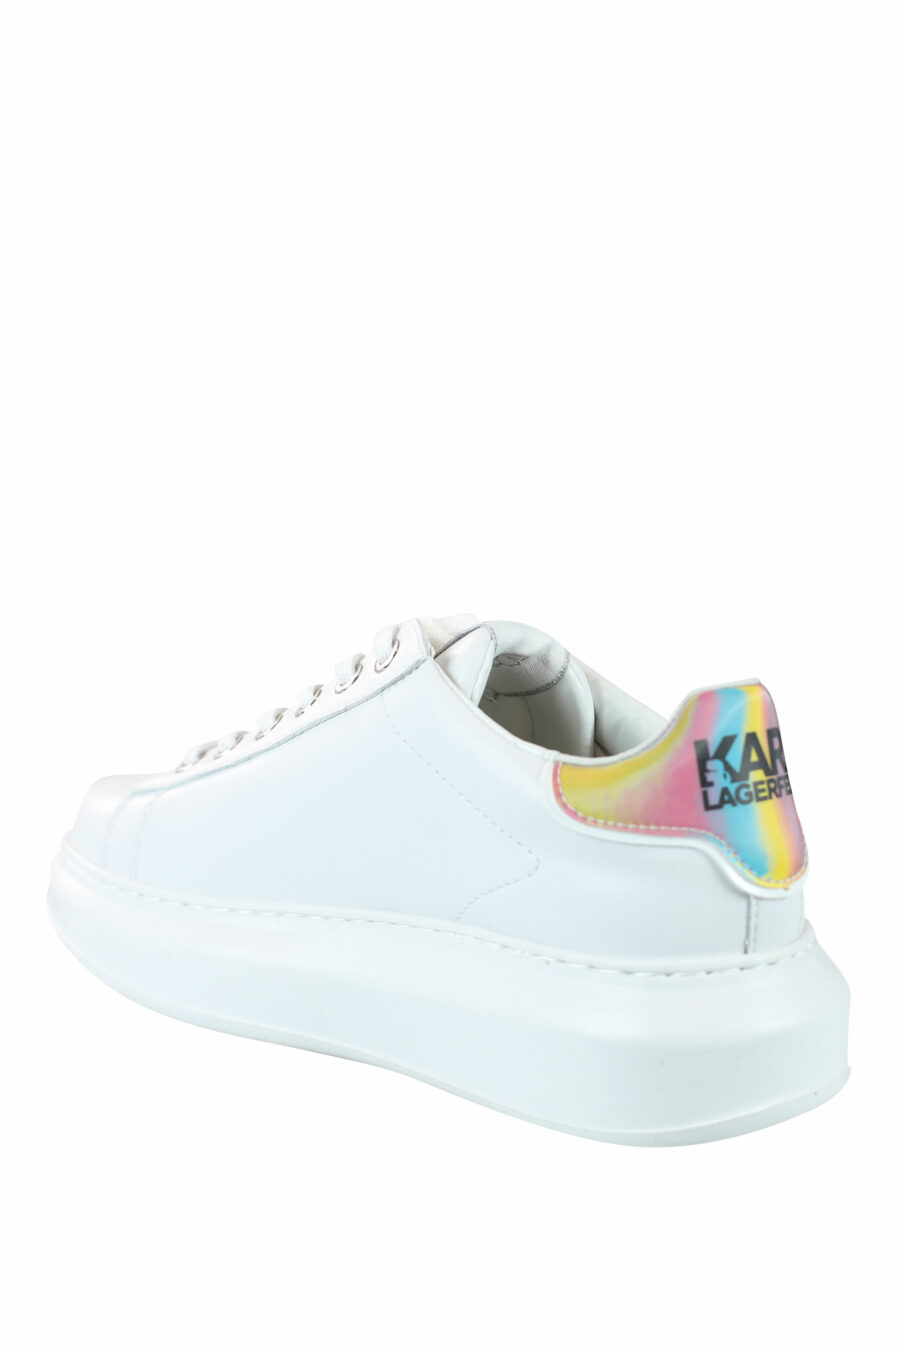 Zapatillas blancas con logo multicolor "rue st-guillaume" - IMG 0011